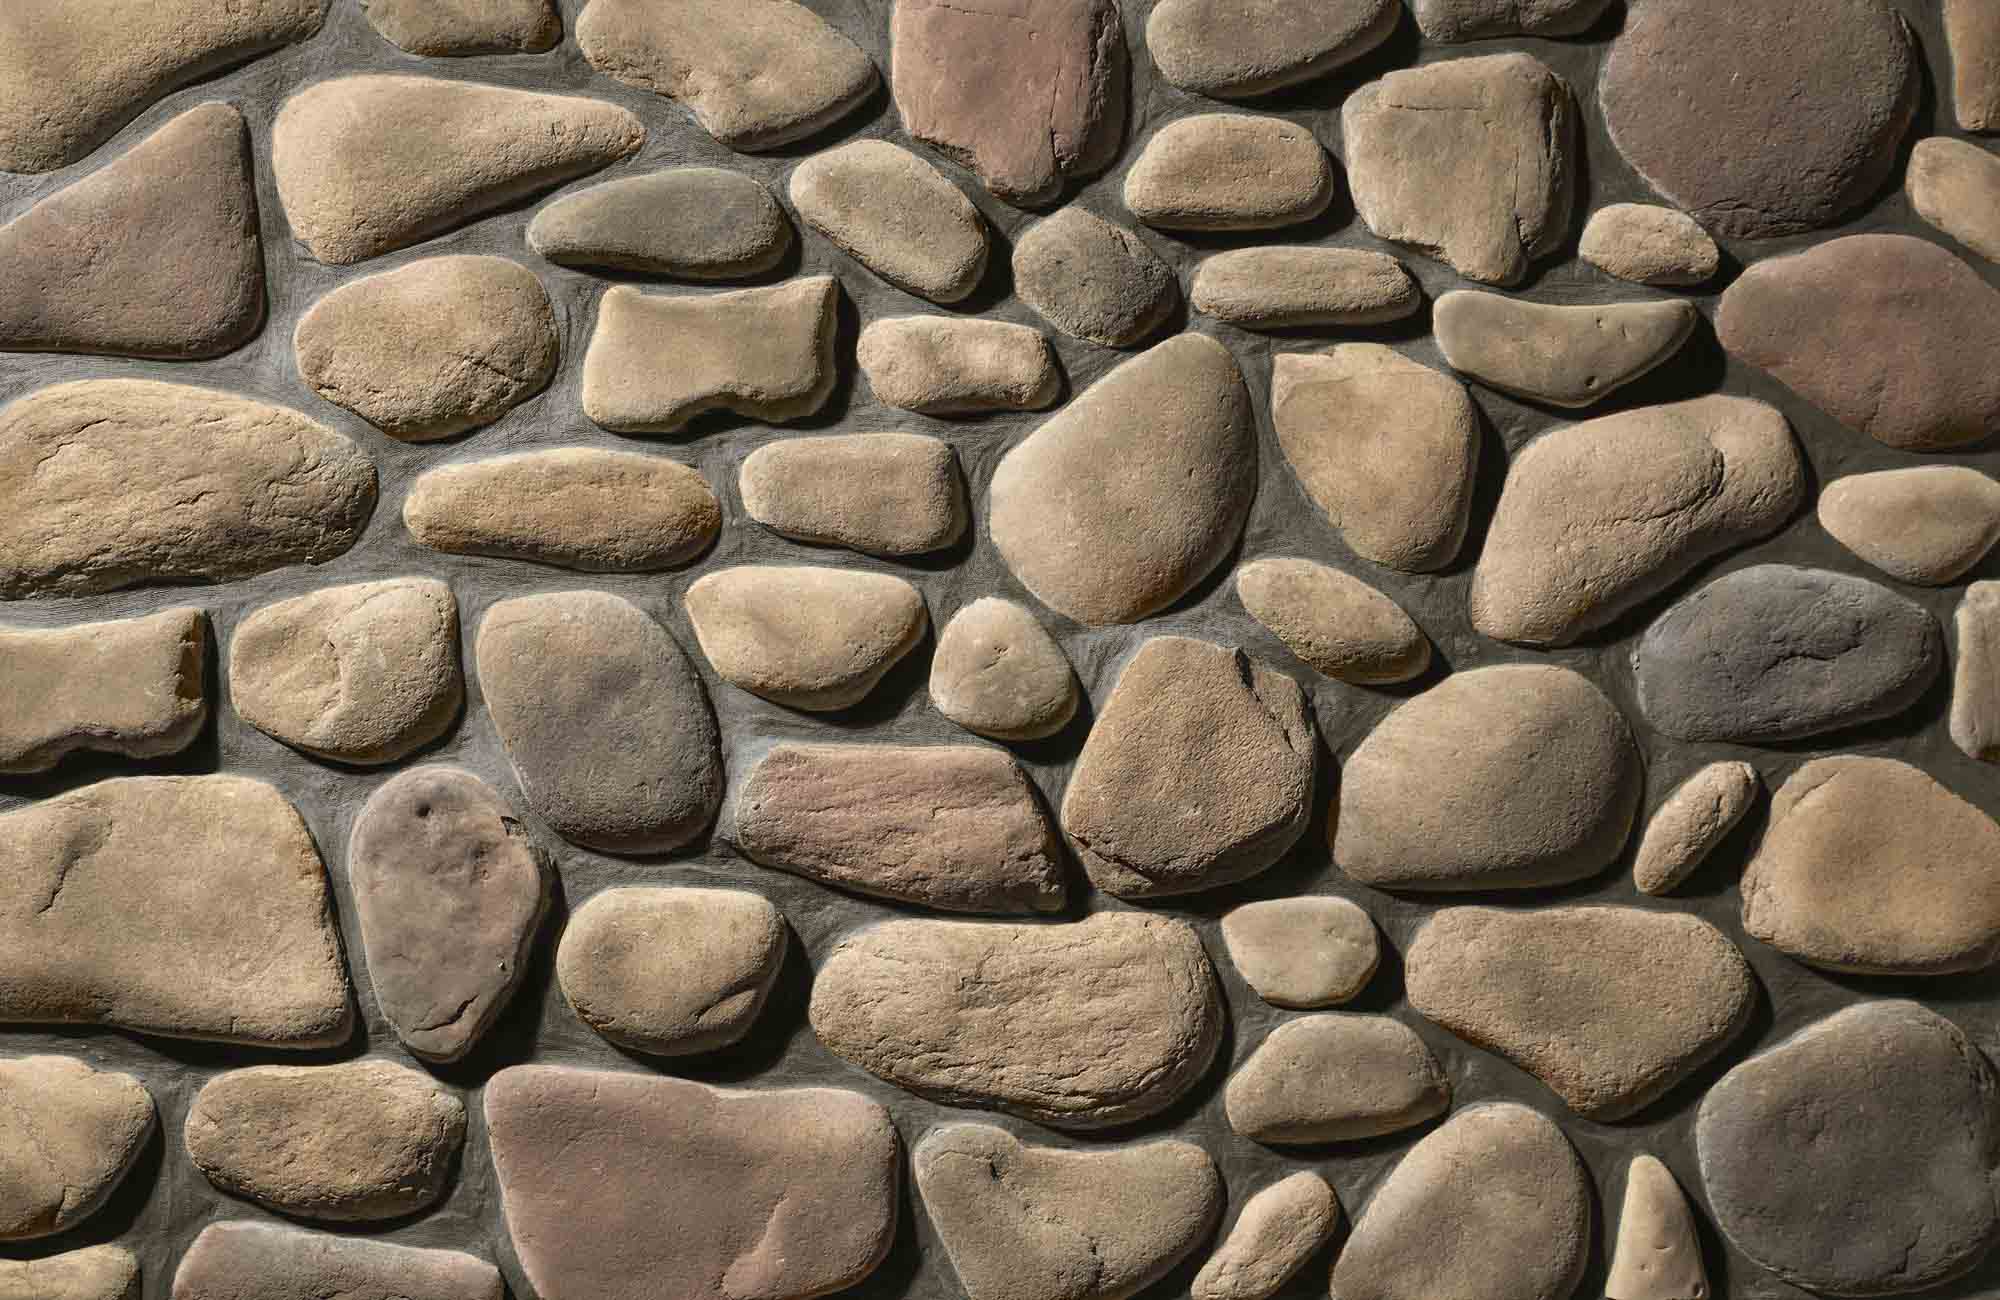 River Rock Fake Rock Wall Panel Sample